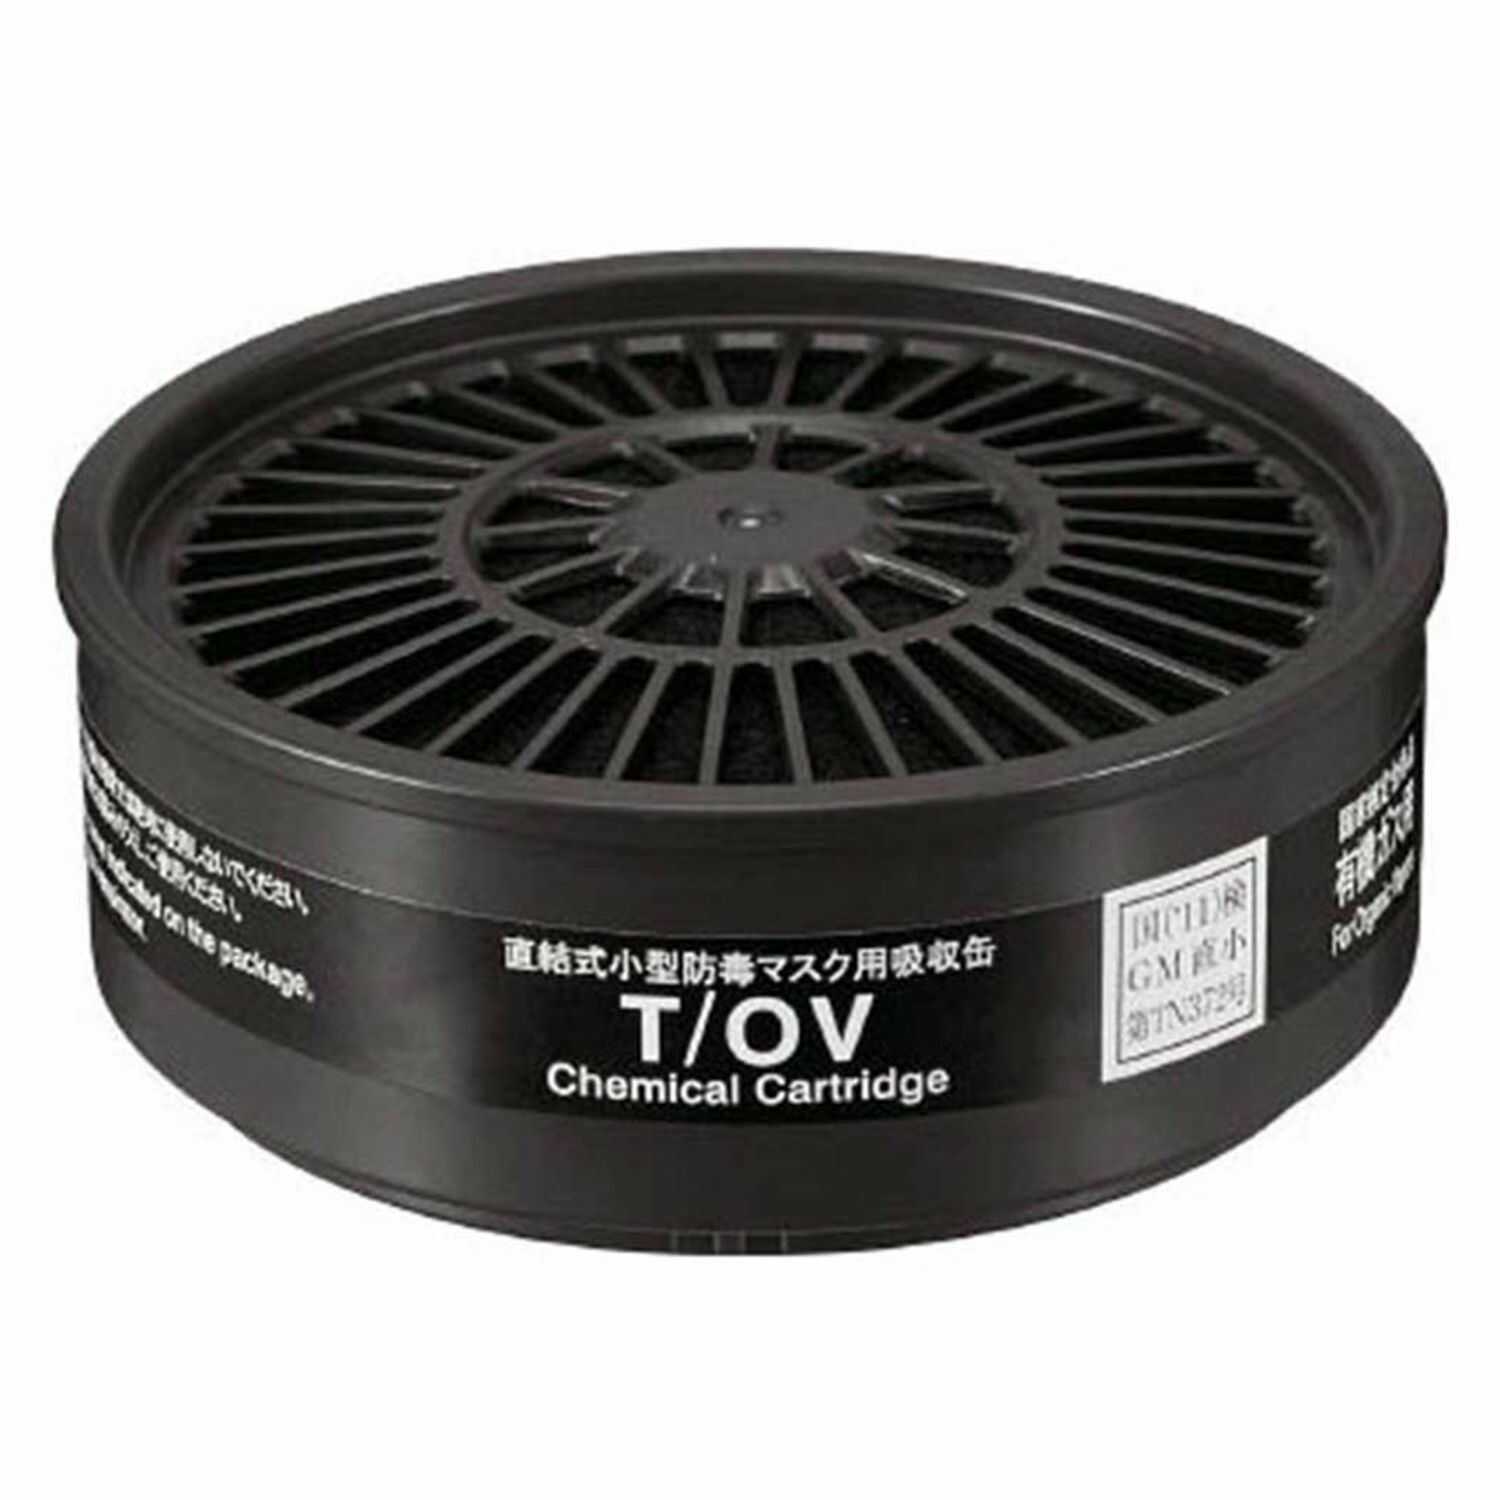 SHIGEMATSU T/OV Organic Vapor Filter Cartridge , Black, TW Series, 01131 (Pack of 1)